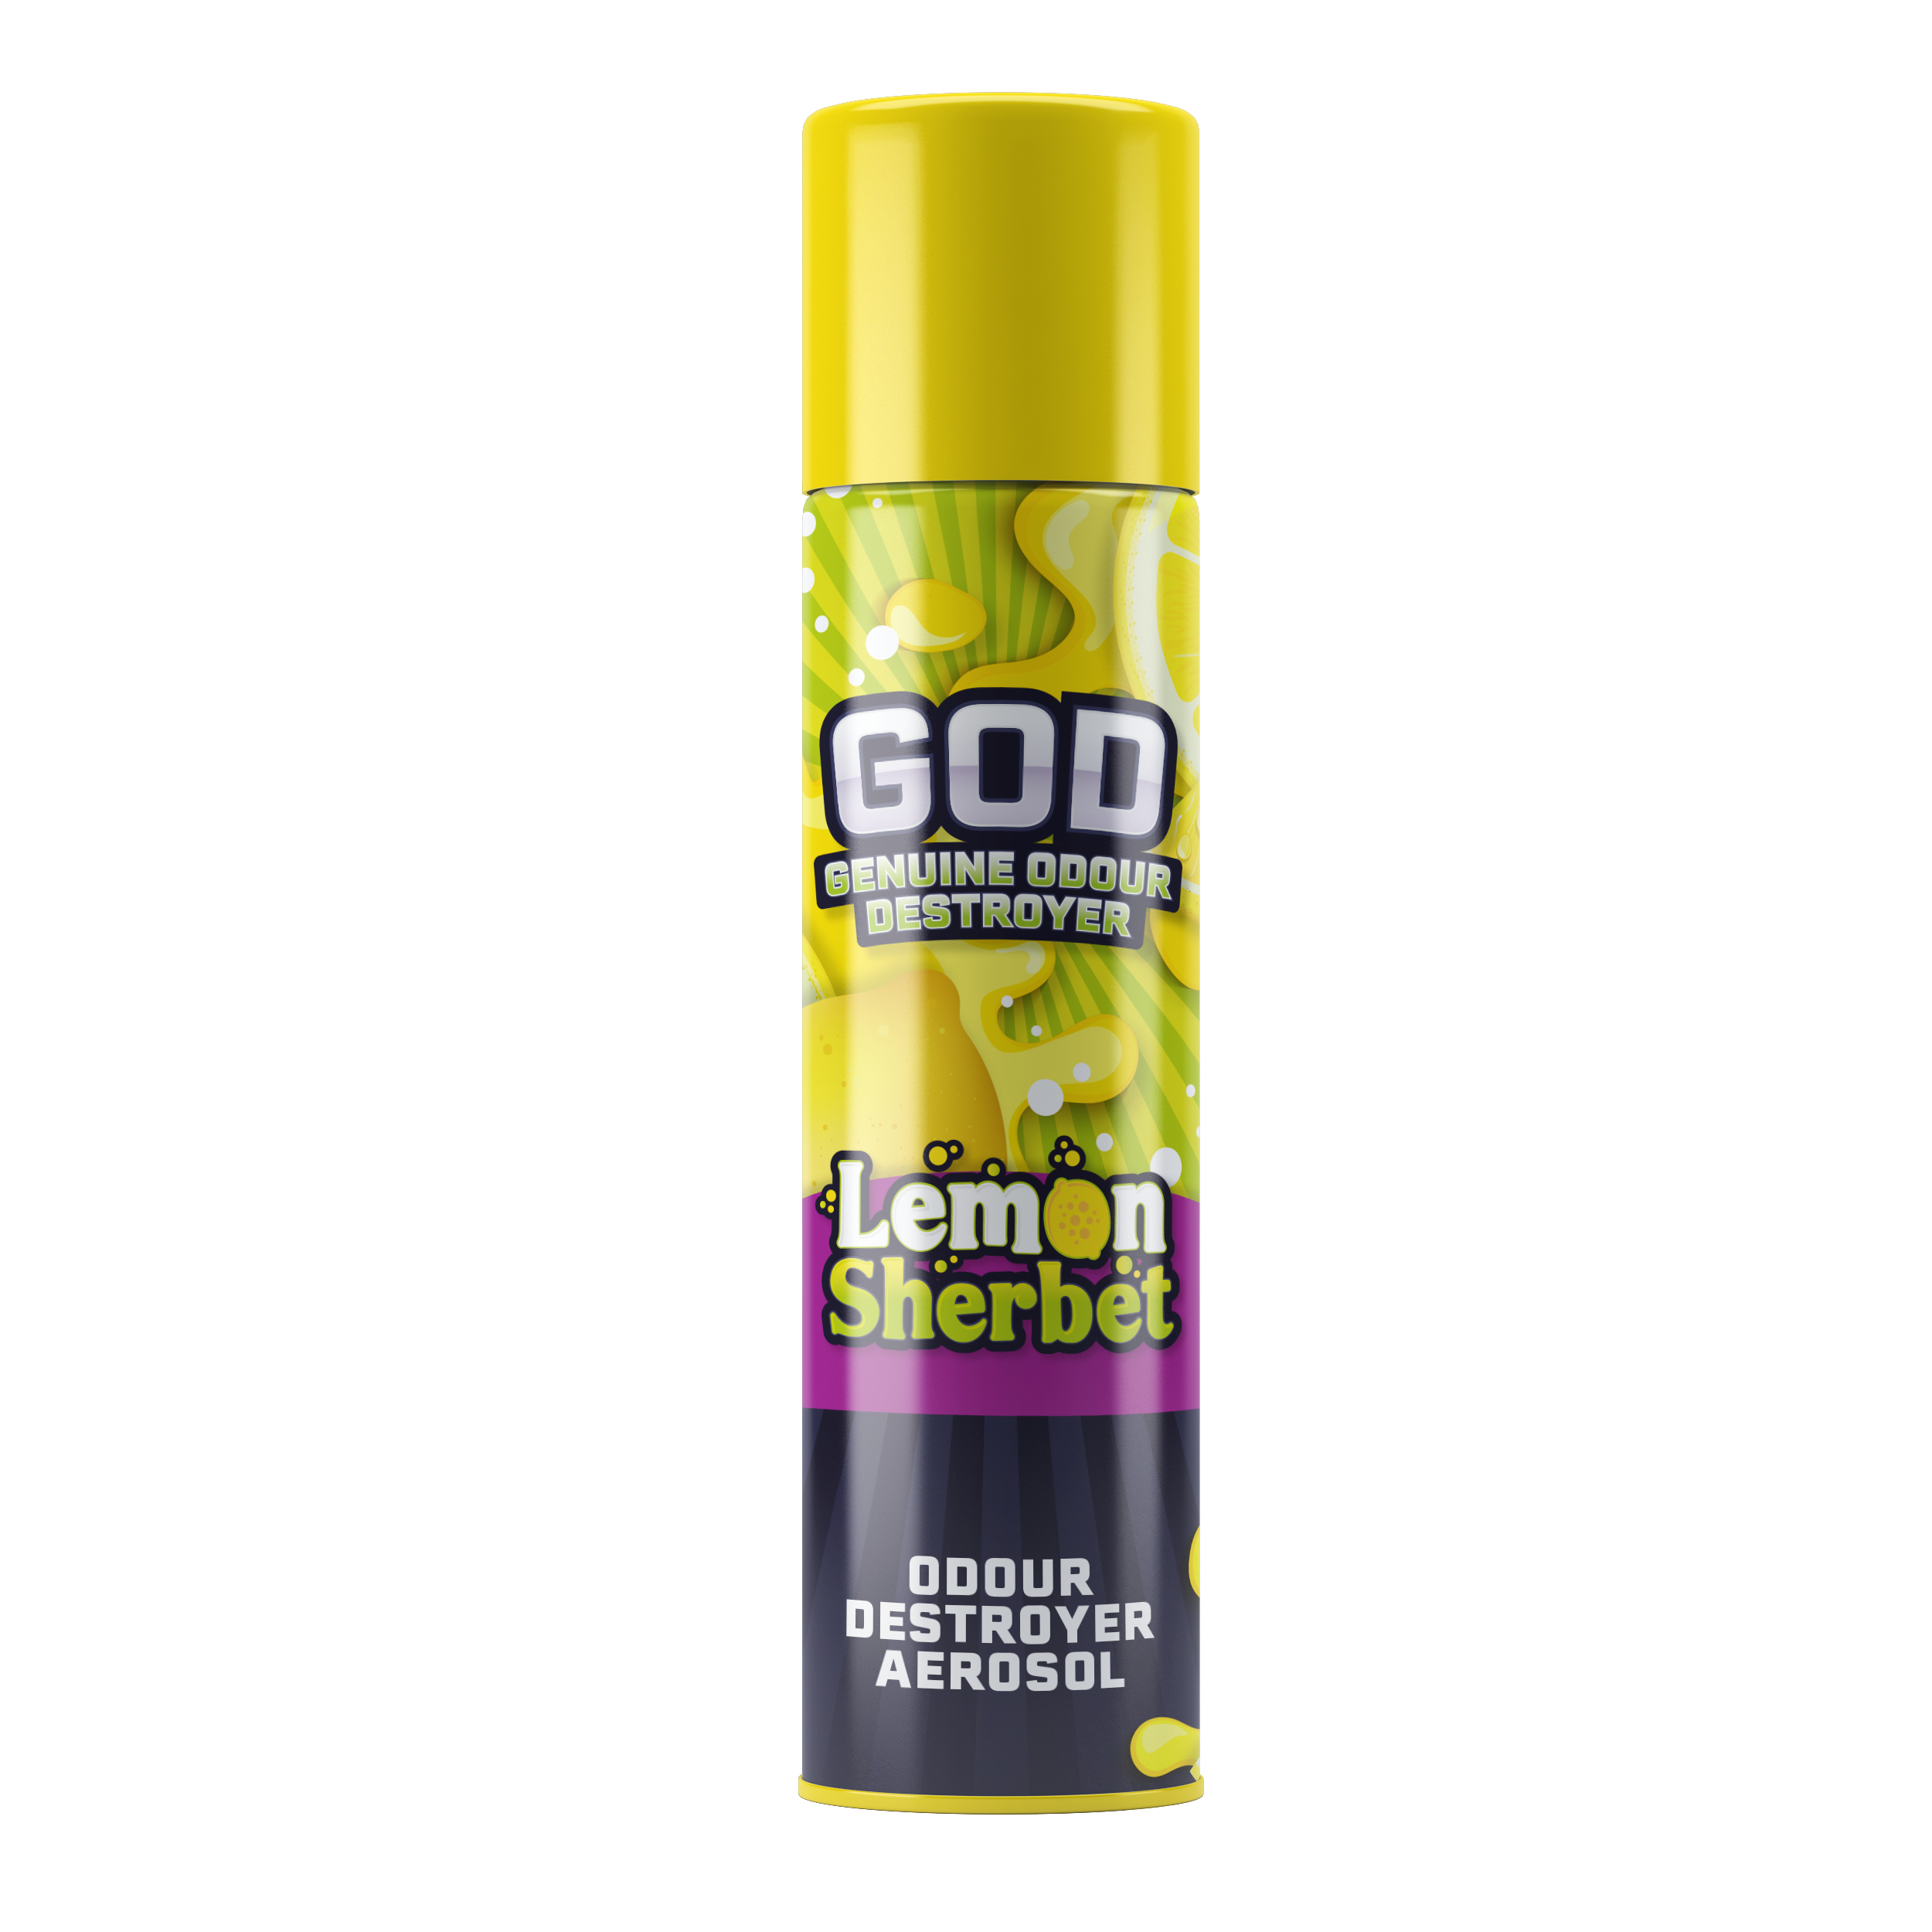 Odour Control Genuine Odour Destroyer Spray 750ml